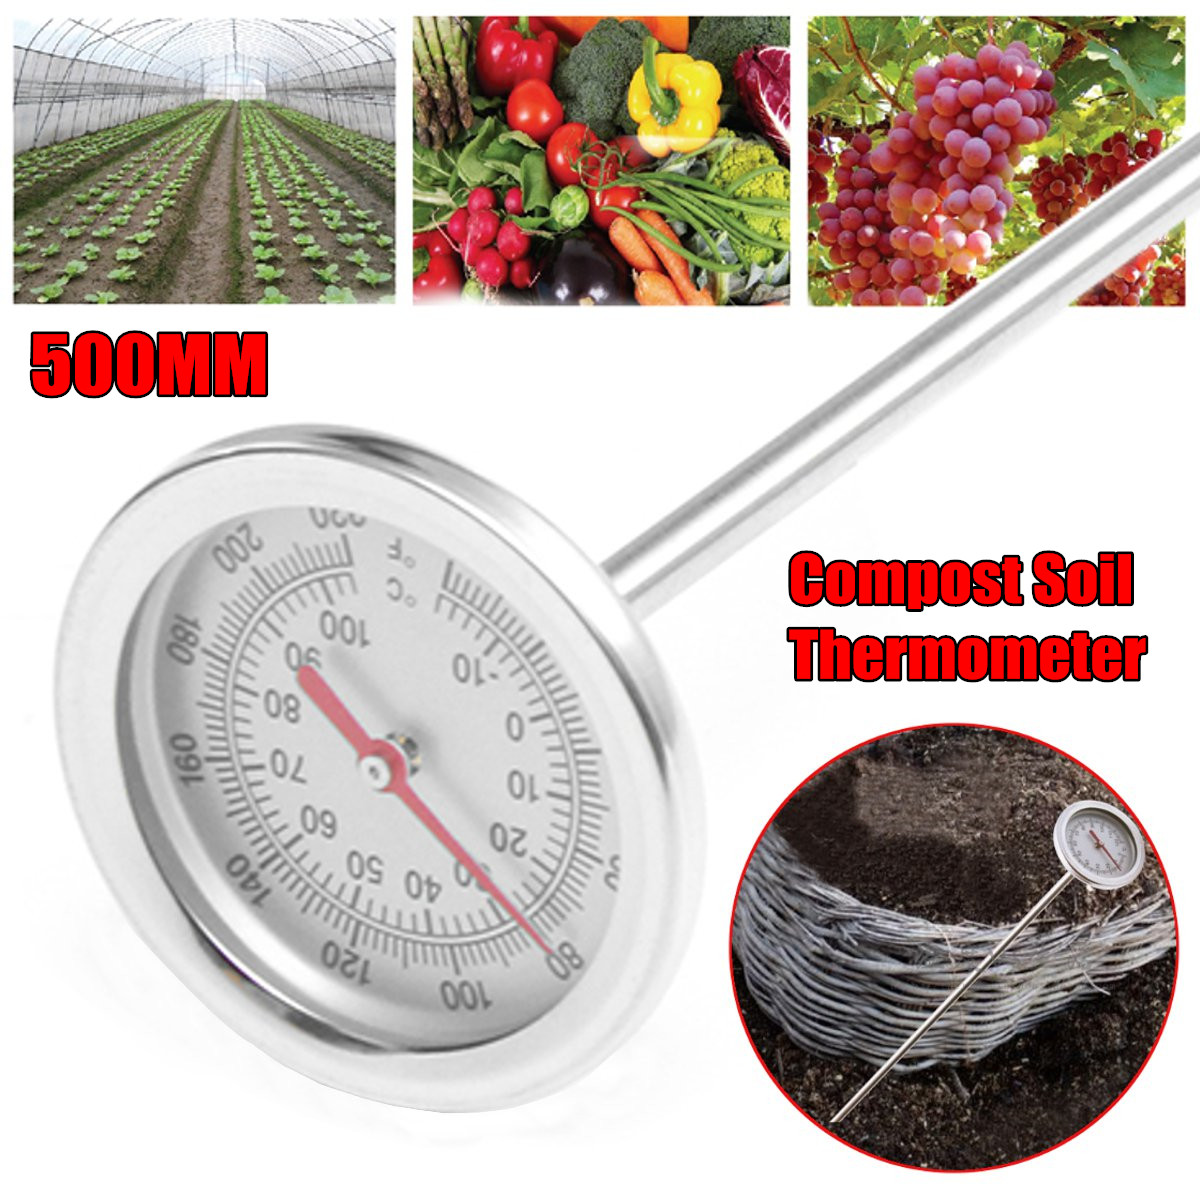 Compost-Soil-Thermometer-Garden-Backyard-Bimetal-Stainless-Steel-Measuring-Probe-1333904-2